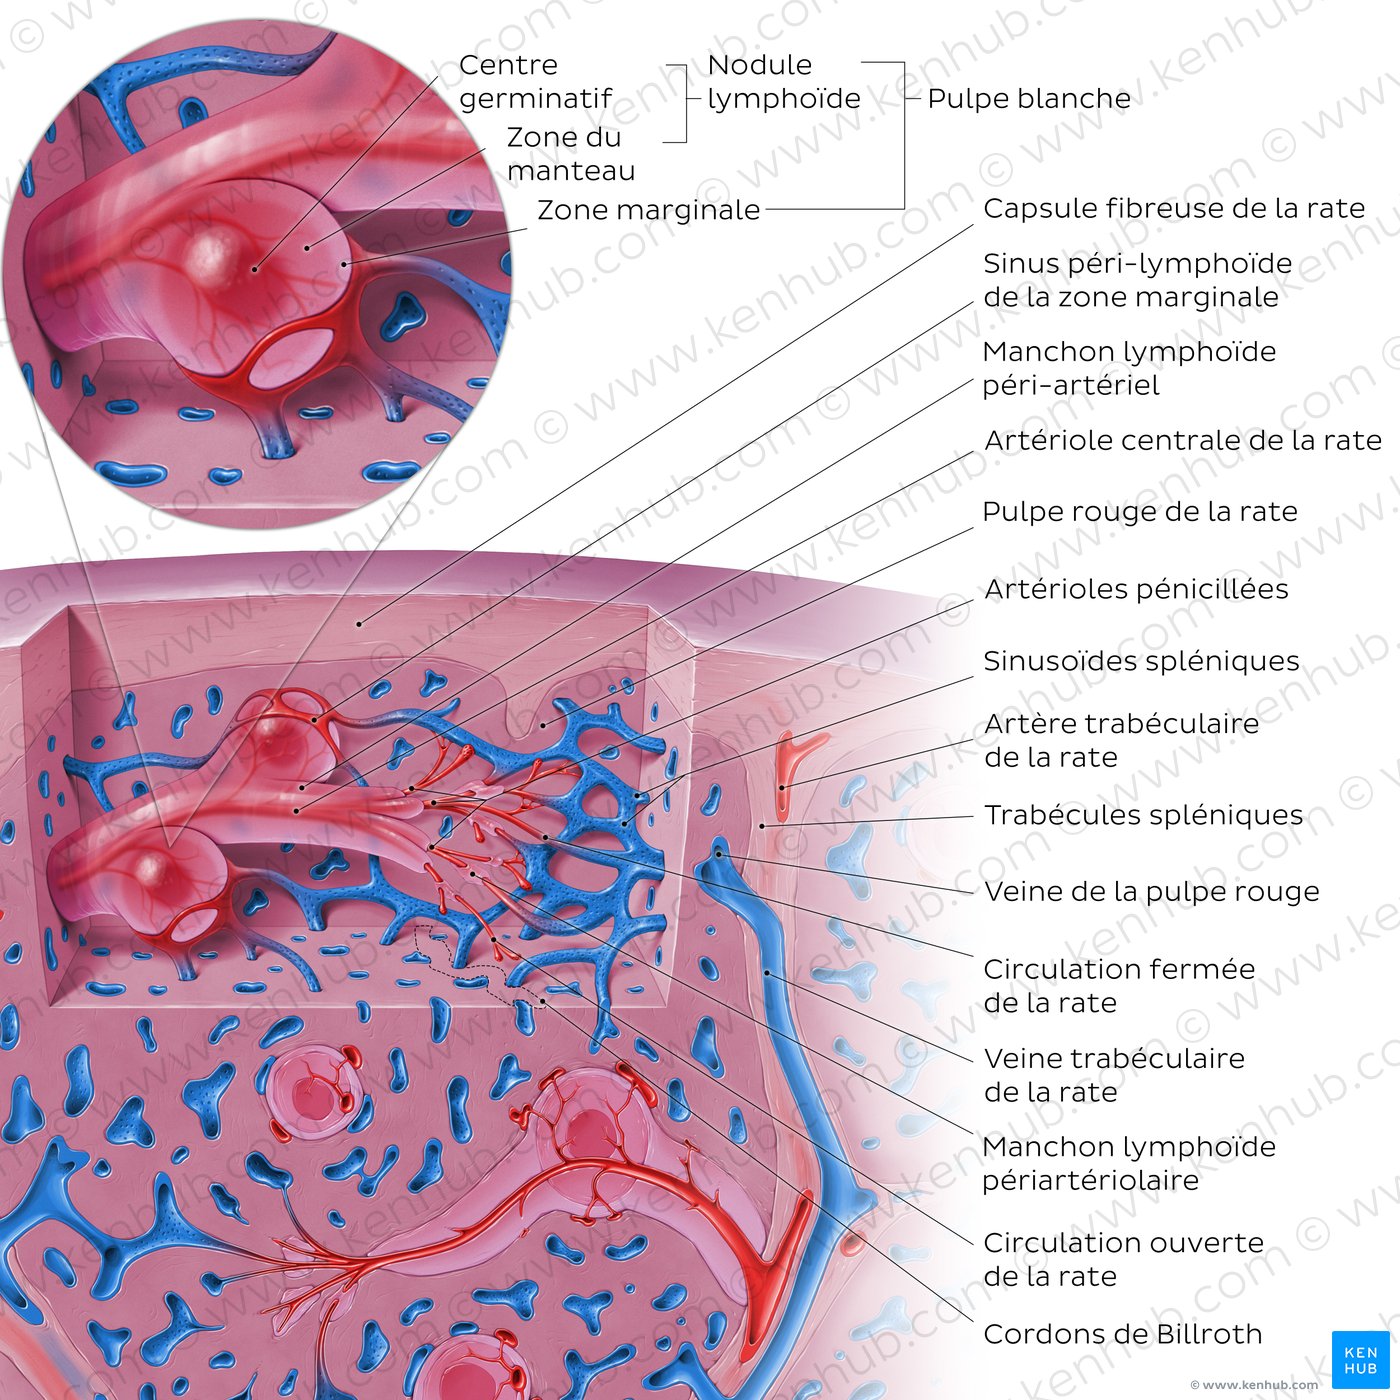 Schéma de l’anatomie microscopique de la rate